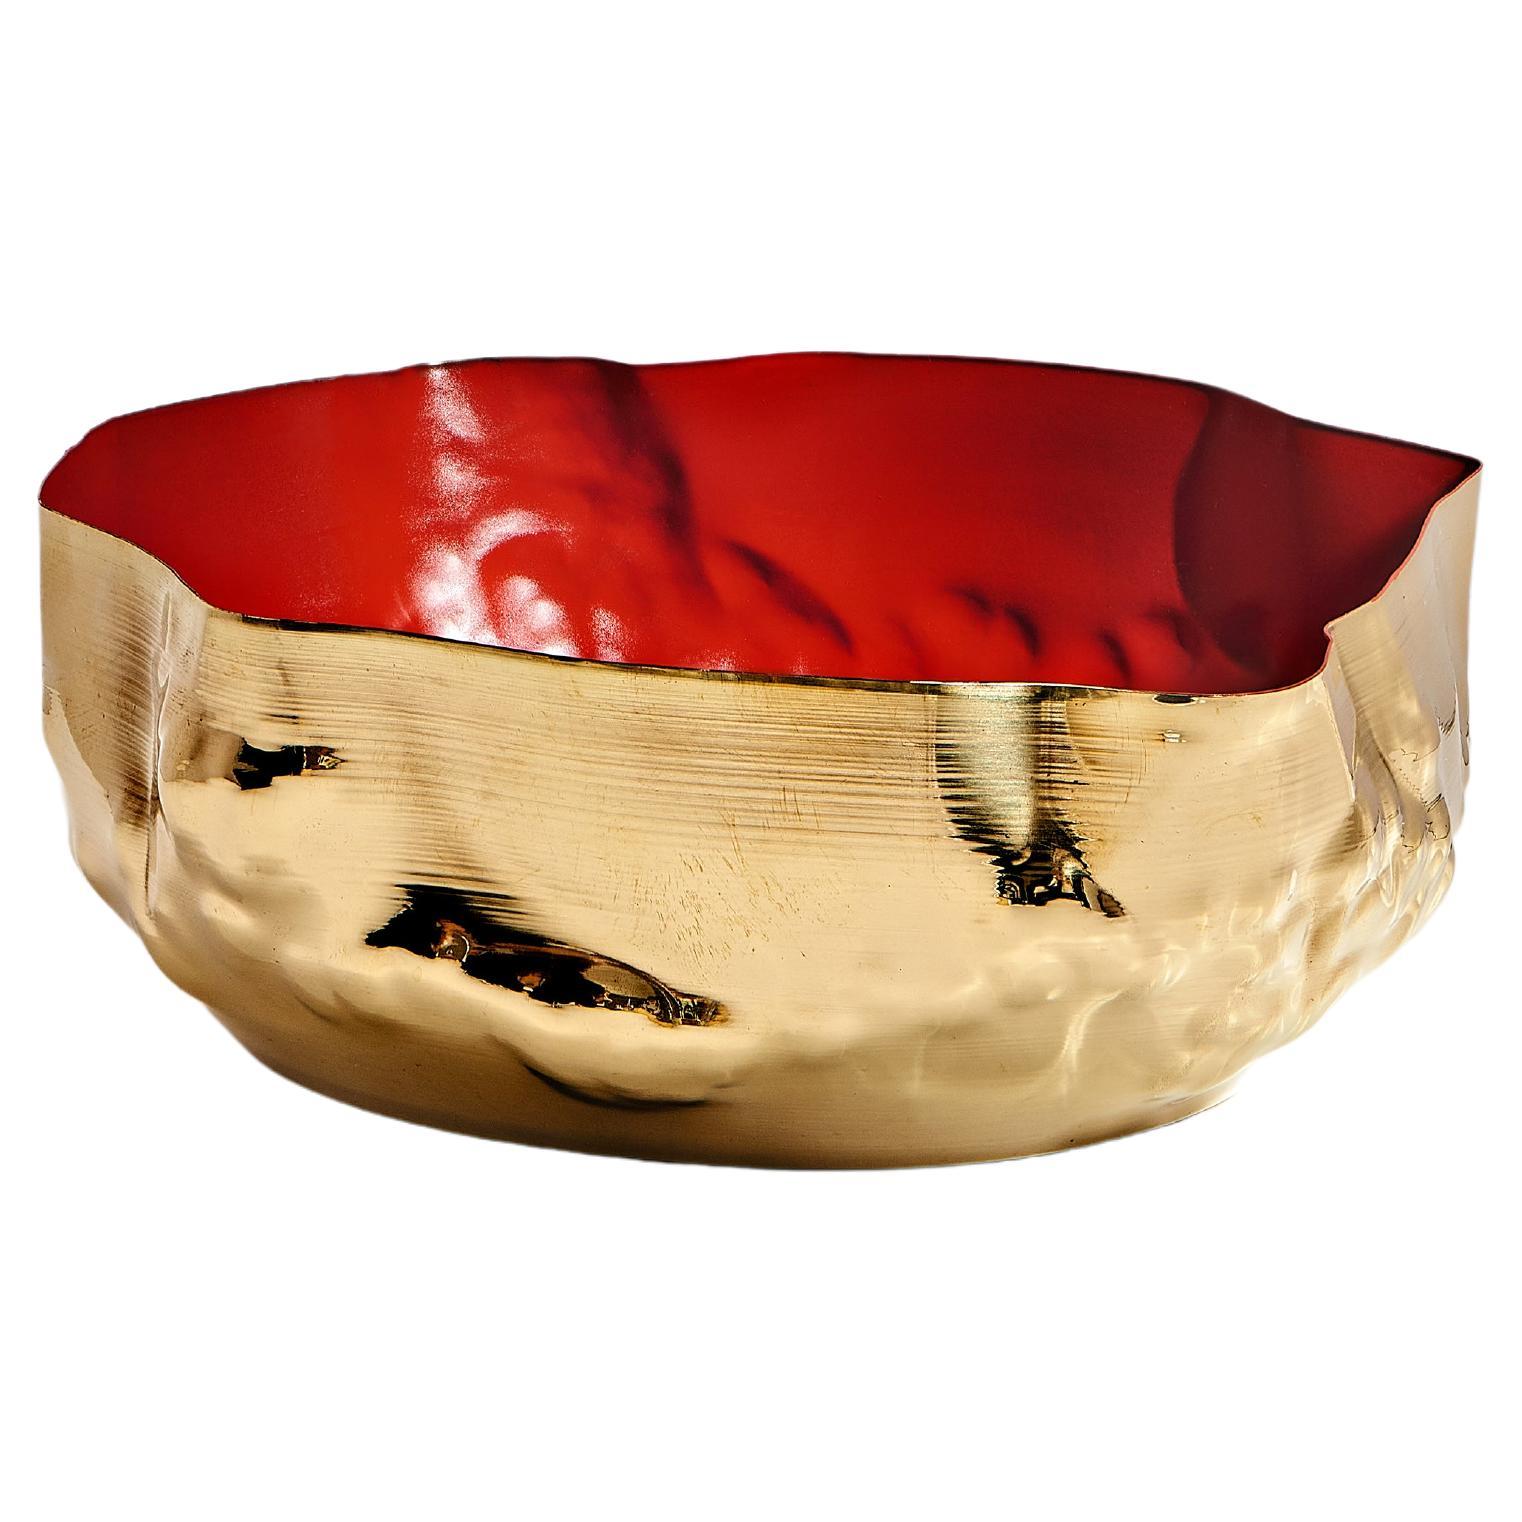 Momento Handmade Colourful Bowl by Jordan Keaney - Brass For Sale